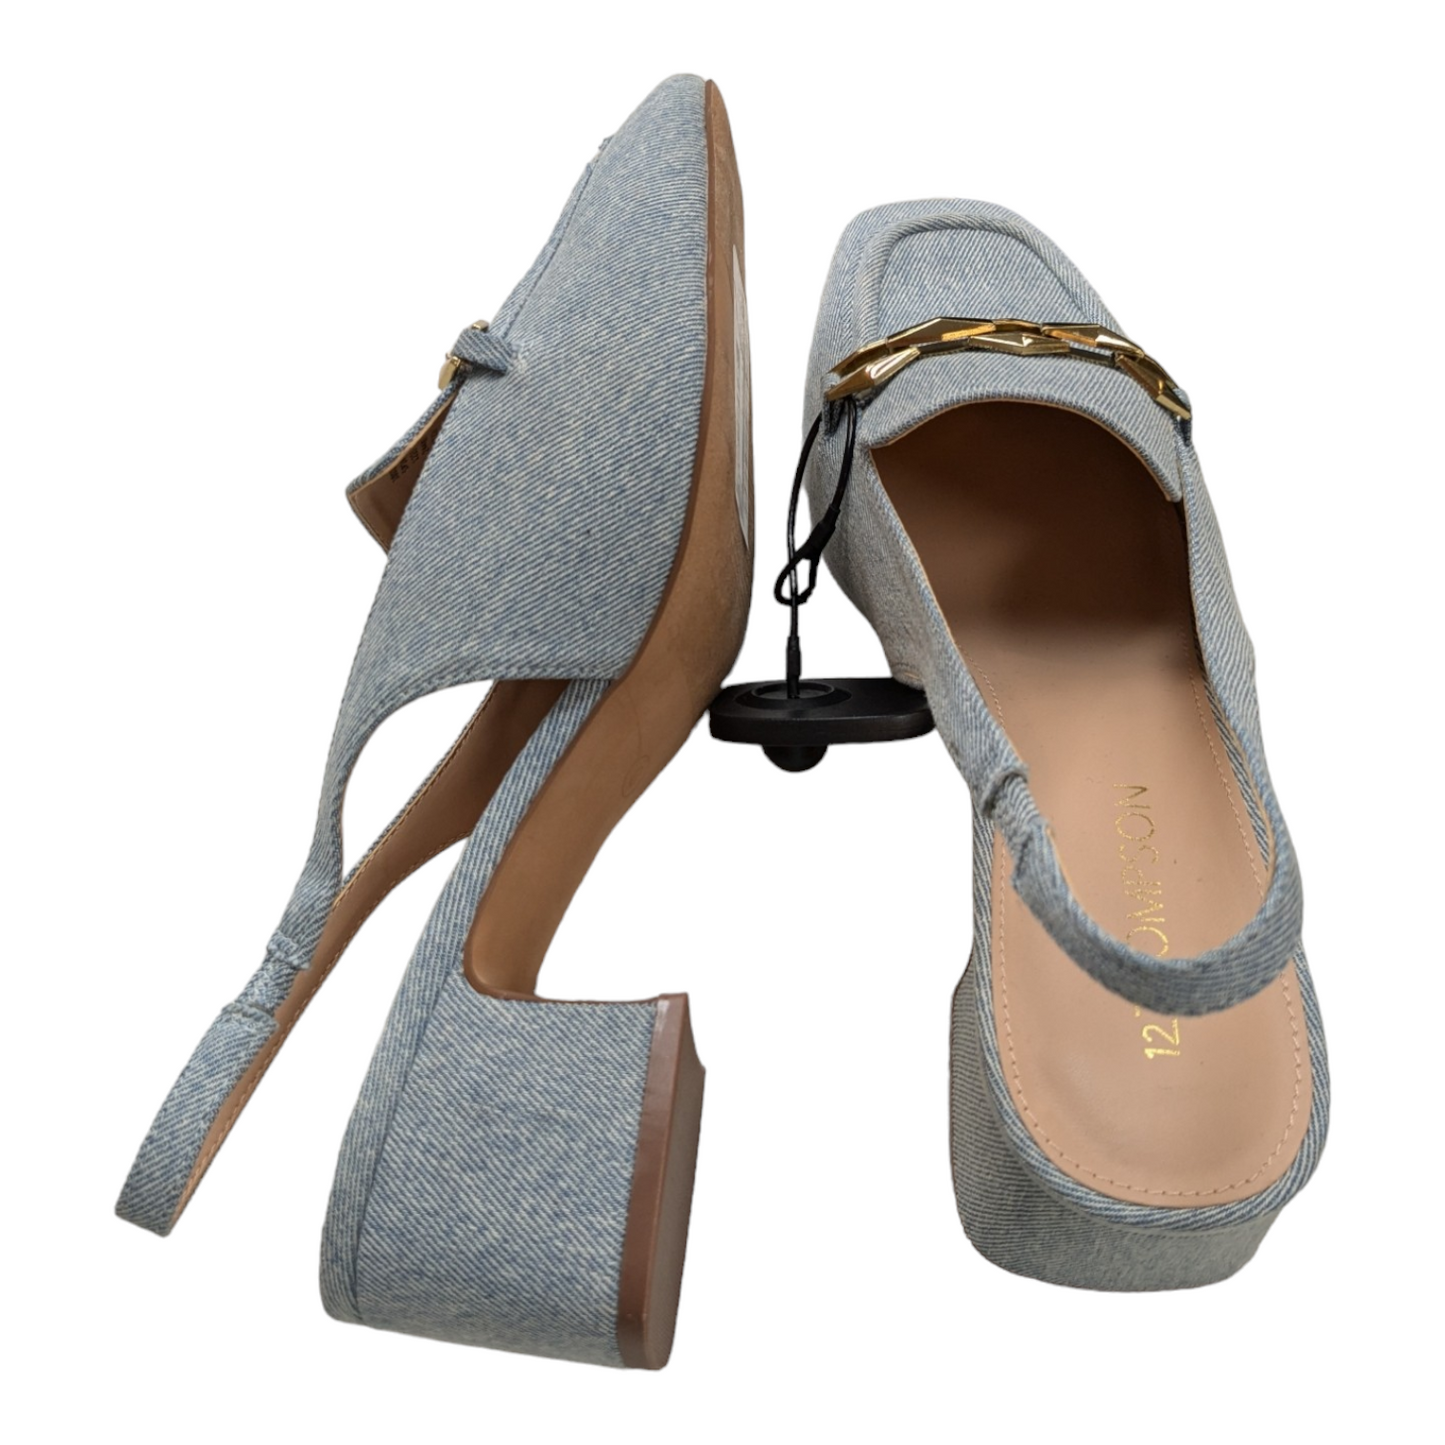 Blue Denim Shoes Heels Block Cmc, Size 8